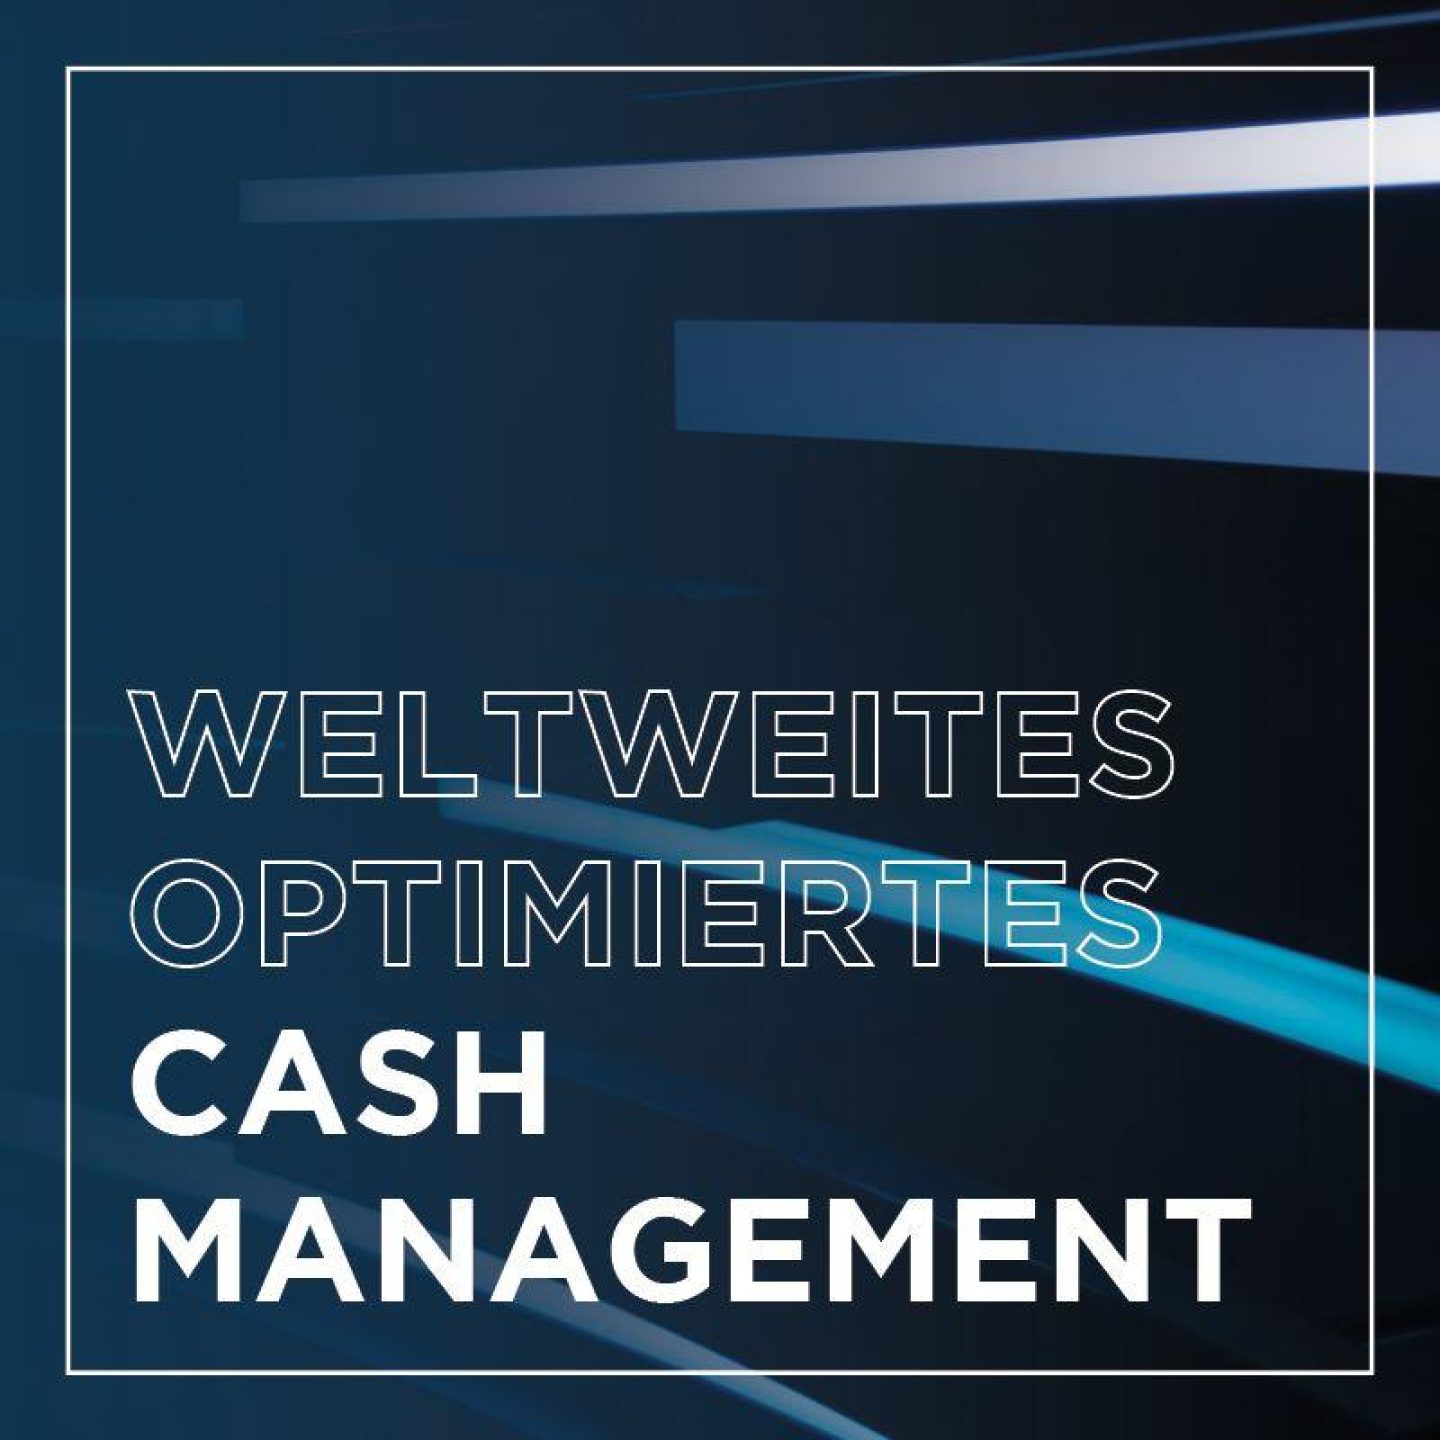 Gambit 800x800px kacheln innovation edition weltweites optimiertes cash management